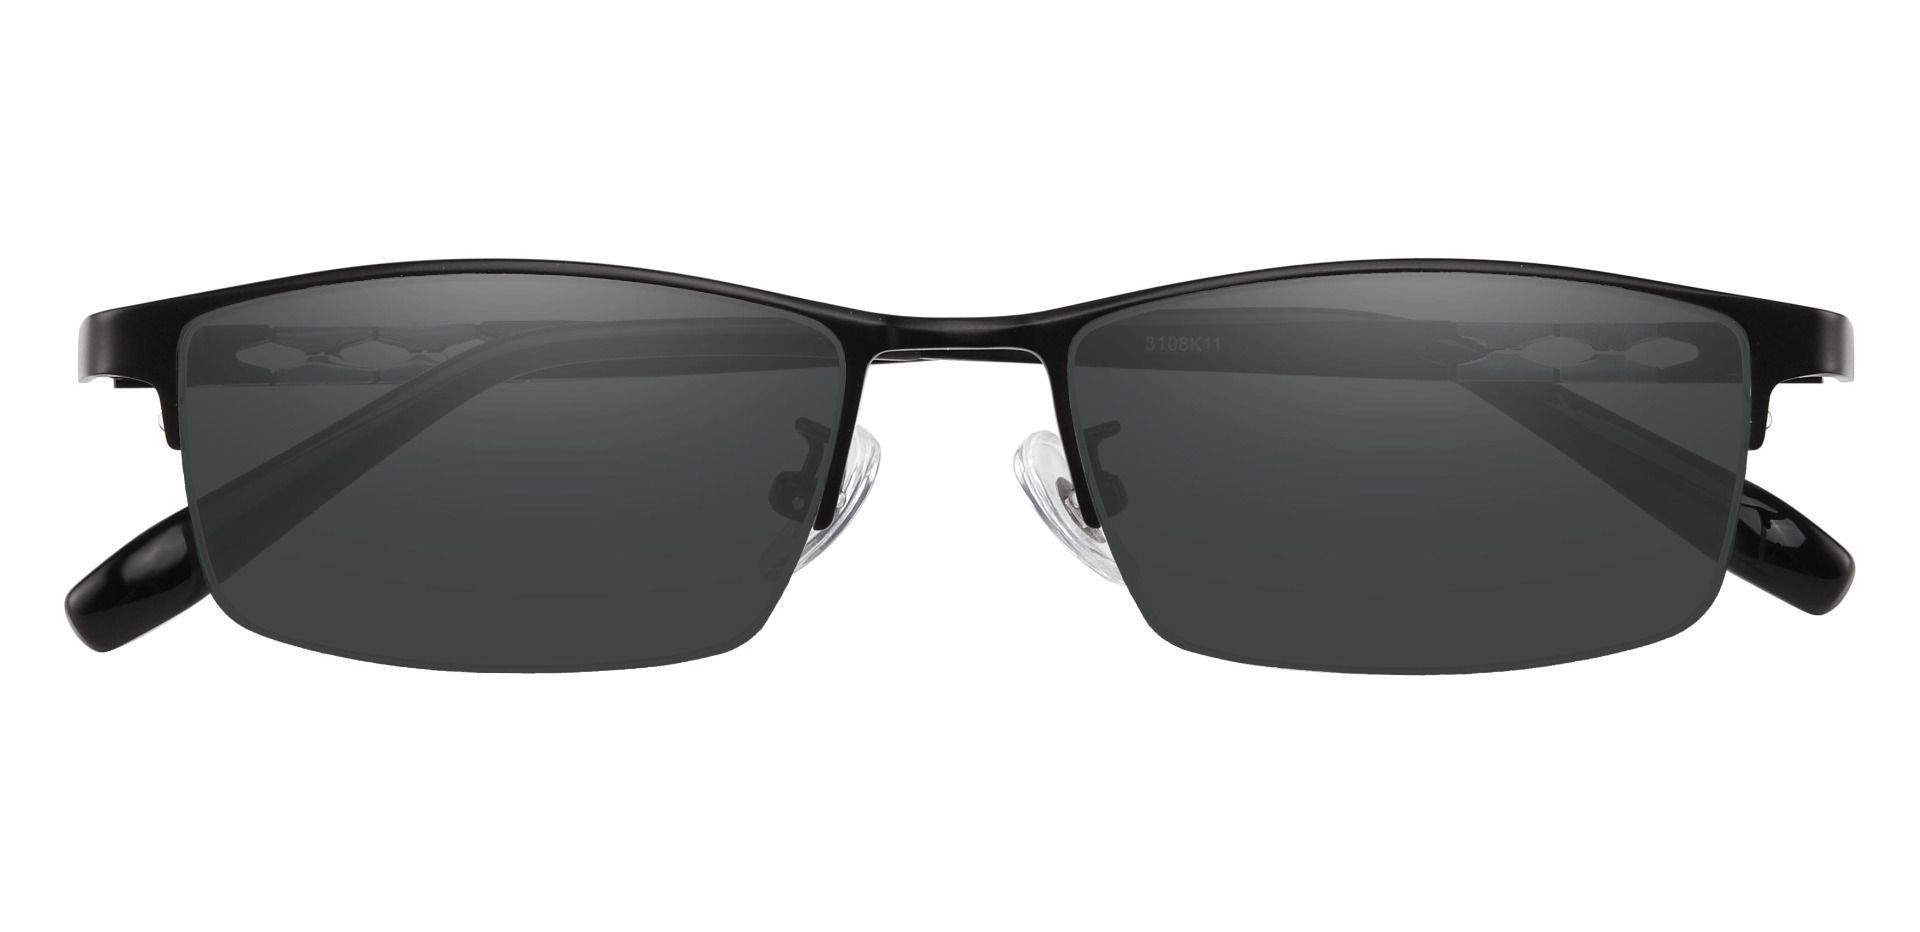 Burlington Rectangle Progressive Sunglasses - Black Frame With Gray Lenses